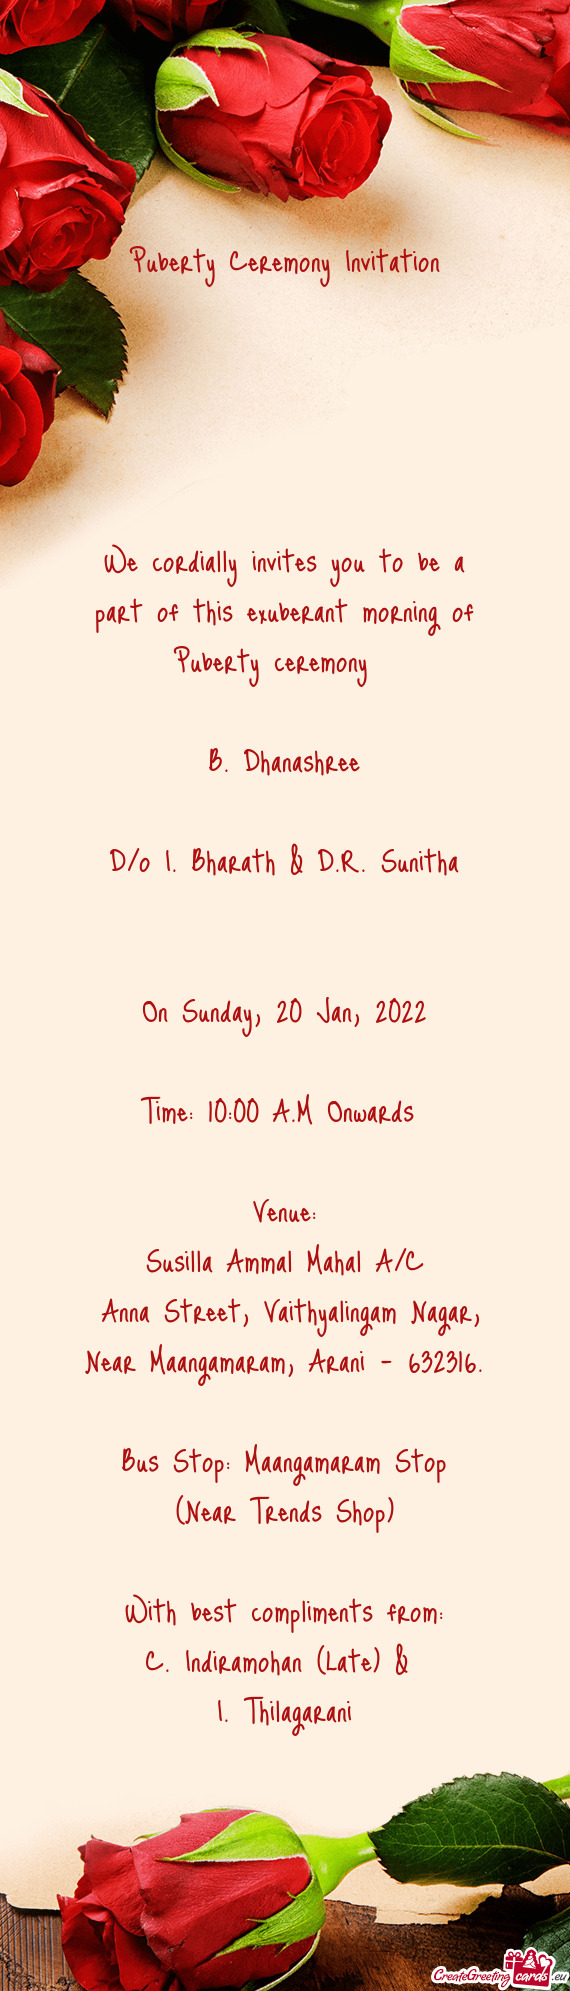 D/o I. Bharath & D.R. Sunitha